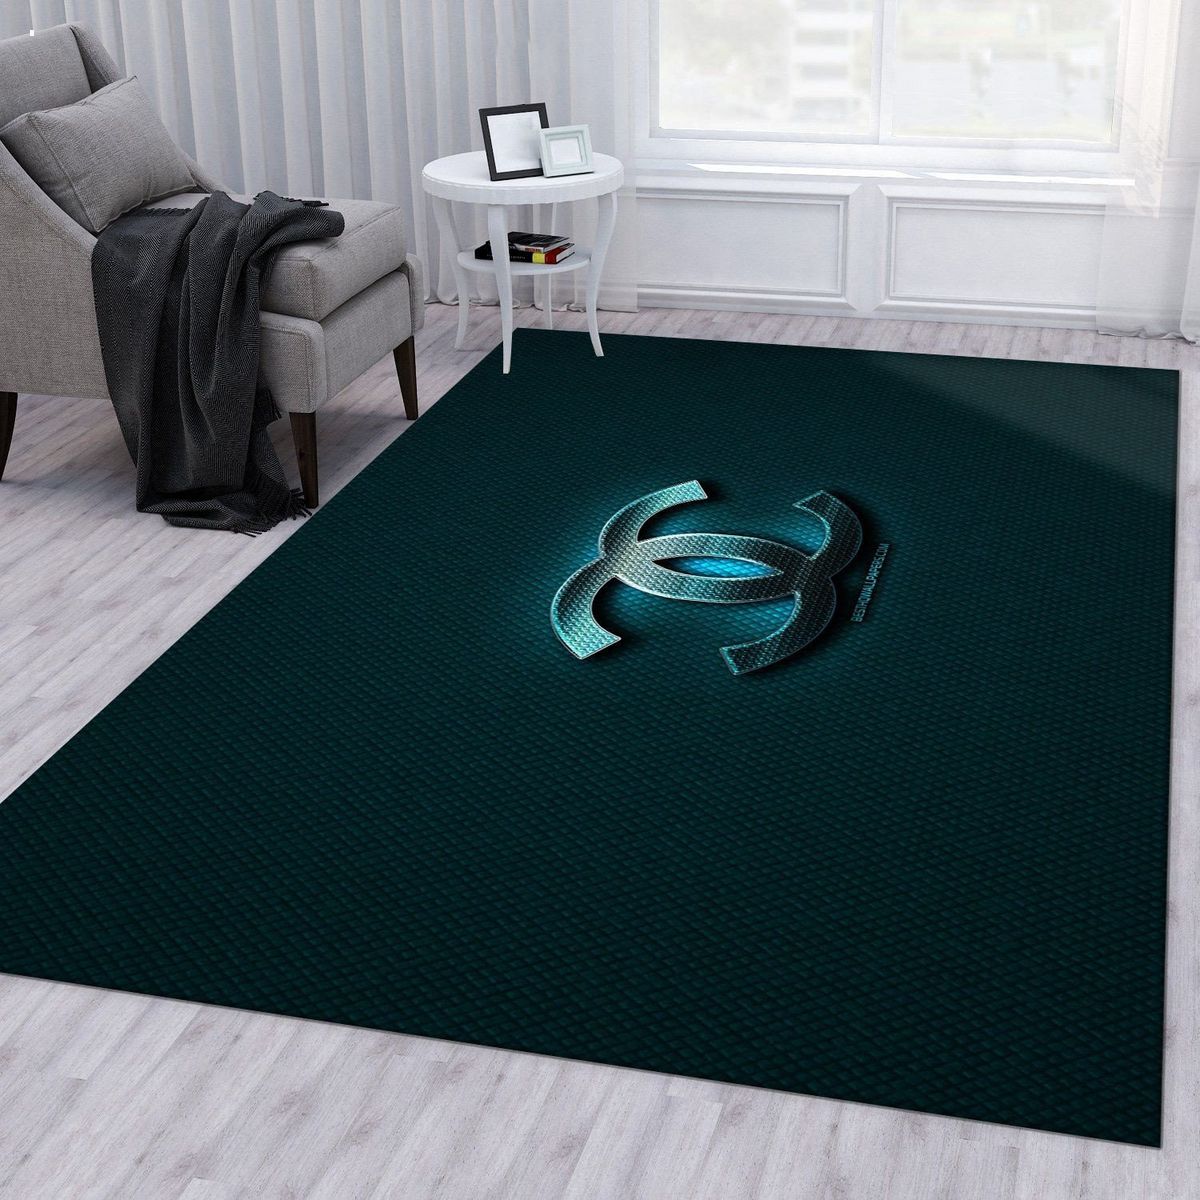 Chanel Dark Green Luxury Brand Carpet Rug Limited Edition